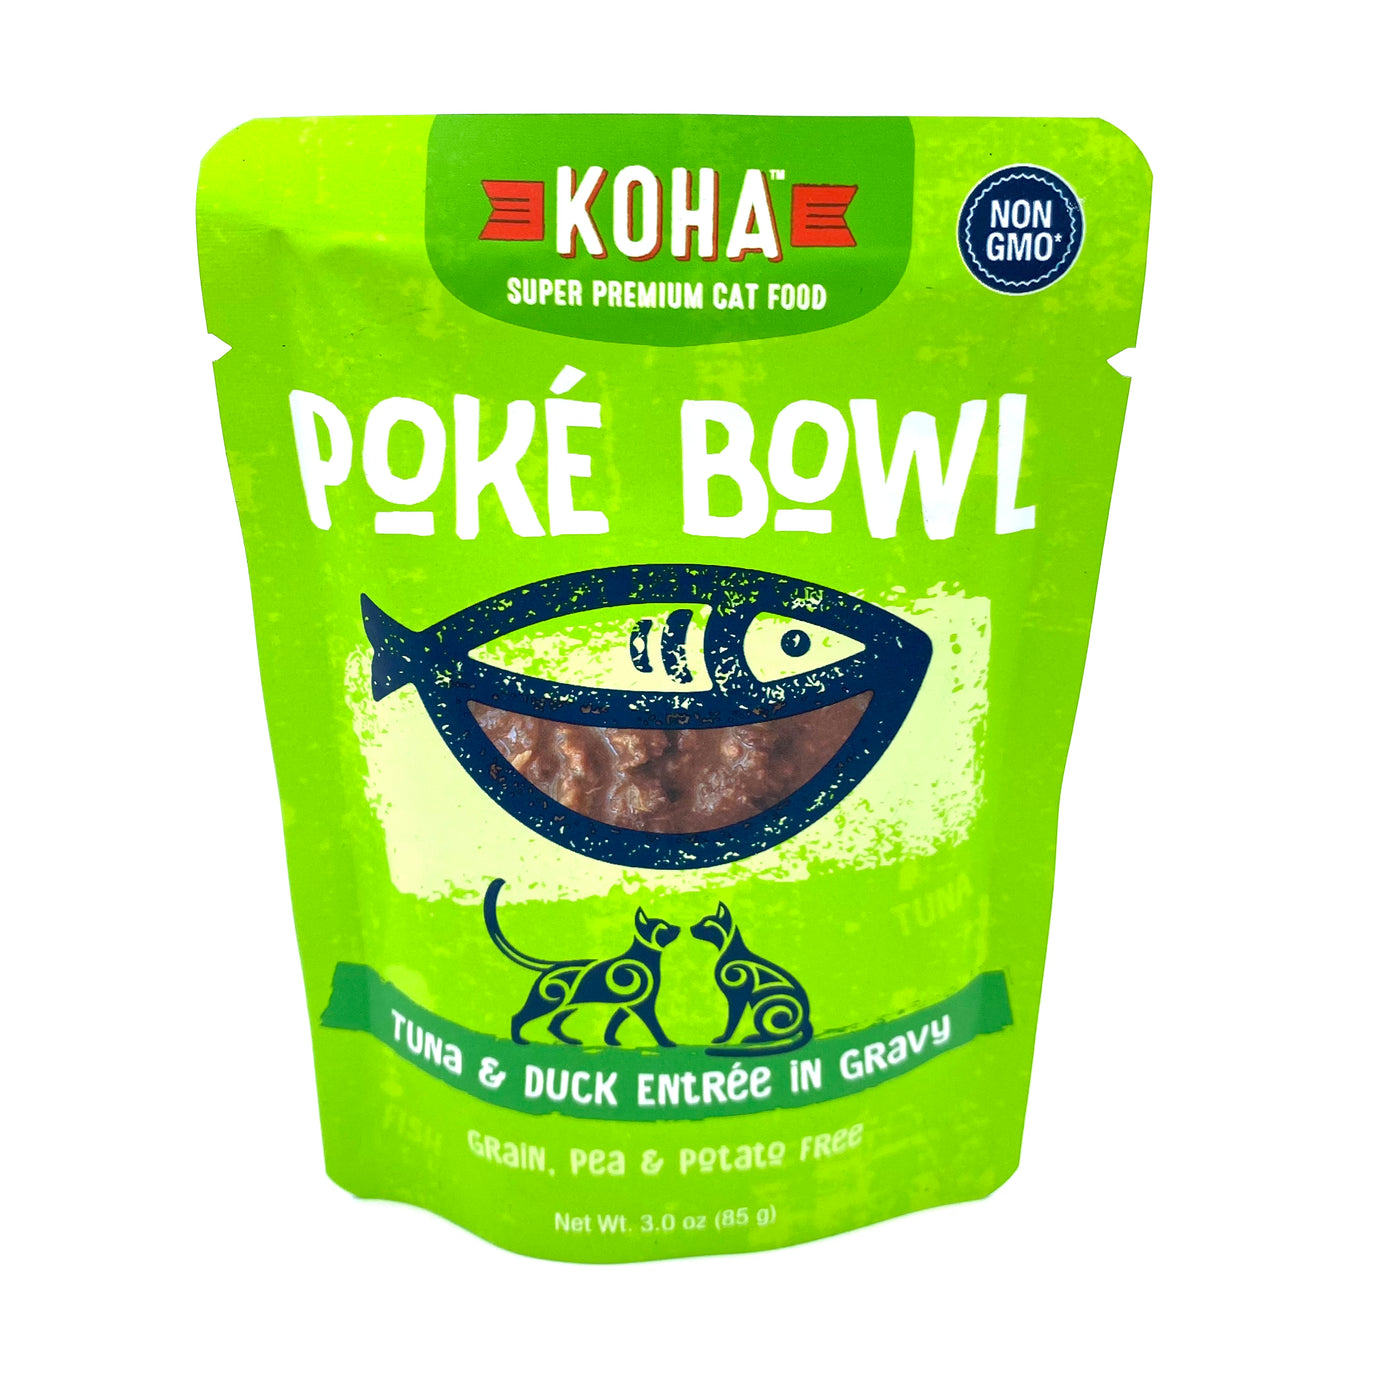 Koha Poké Bowl Tuna & Duck Entrée in Gravy for Cats 3oz